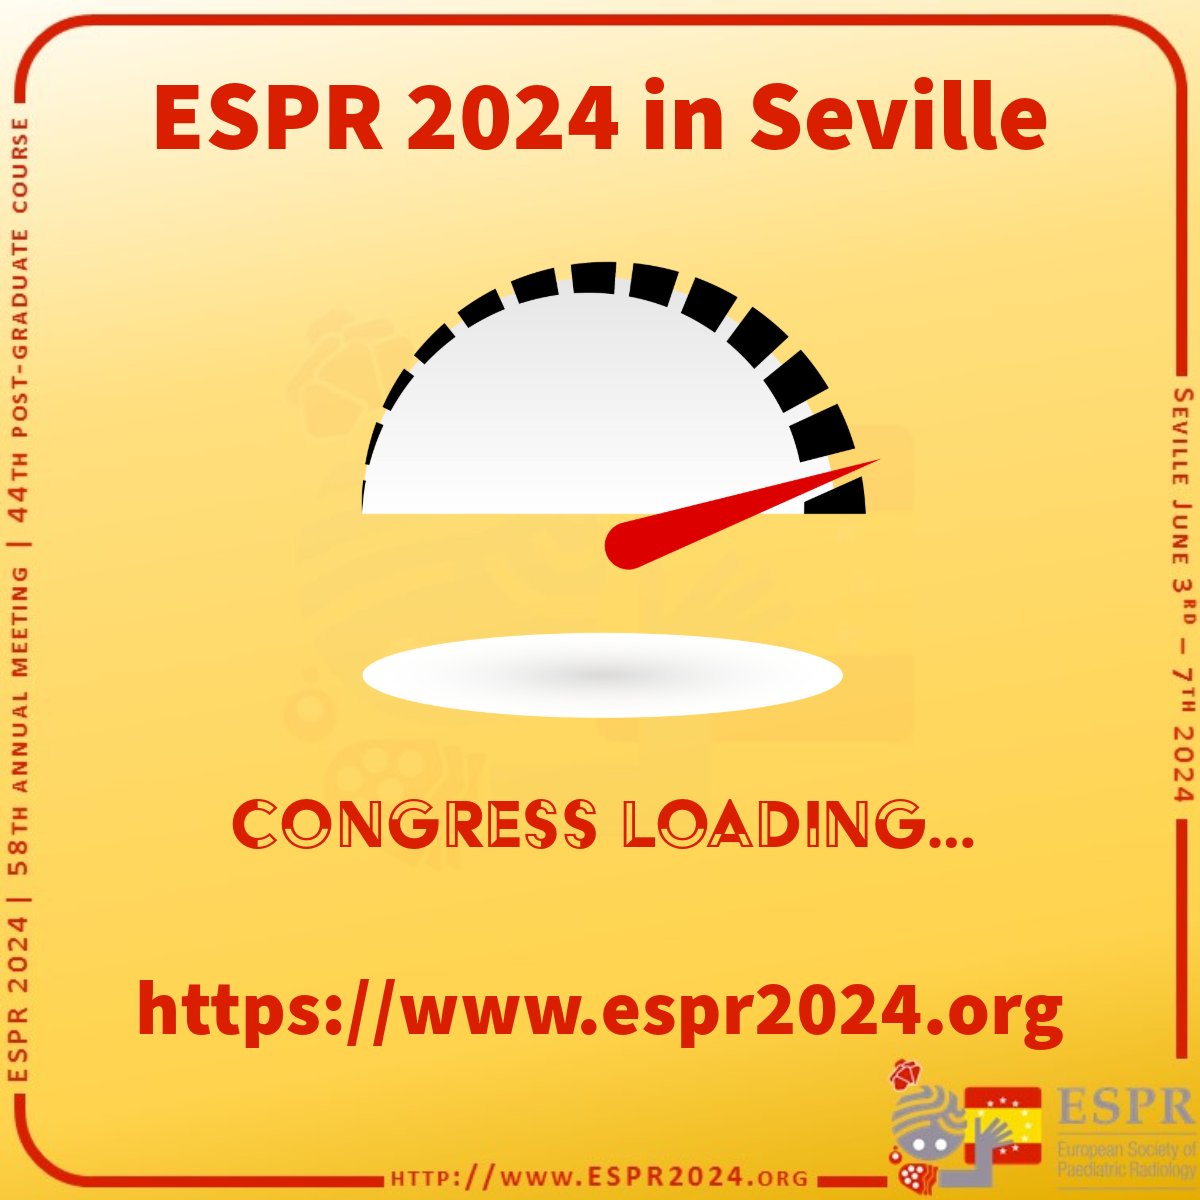 Check out the #ESPR2024 congress website!